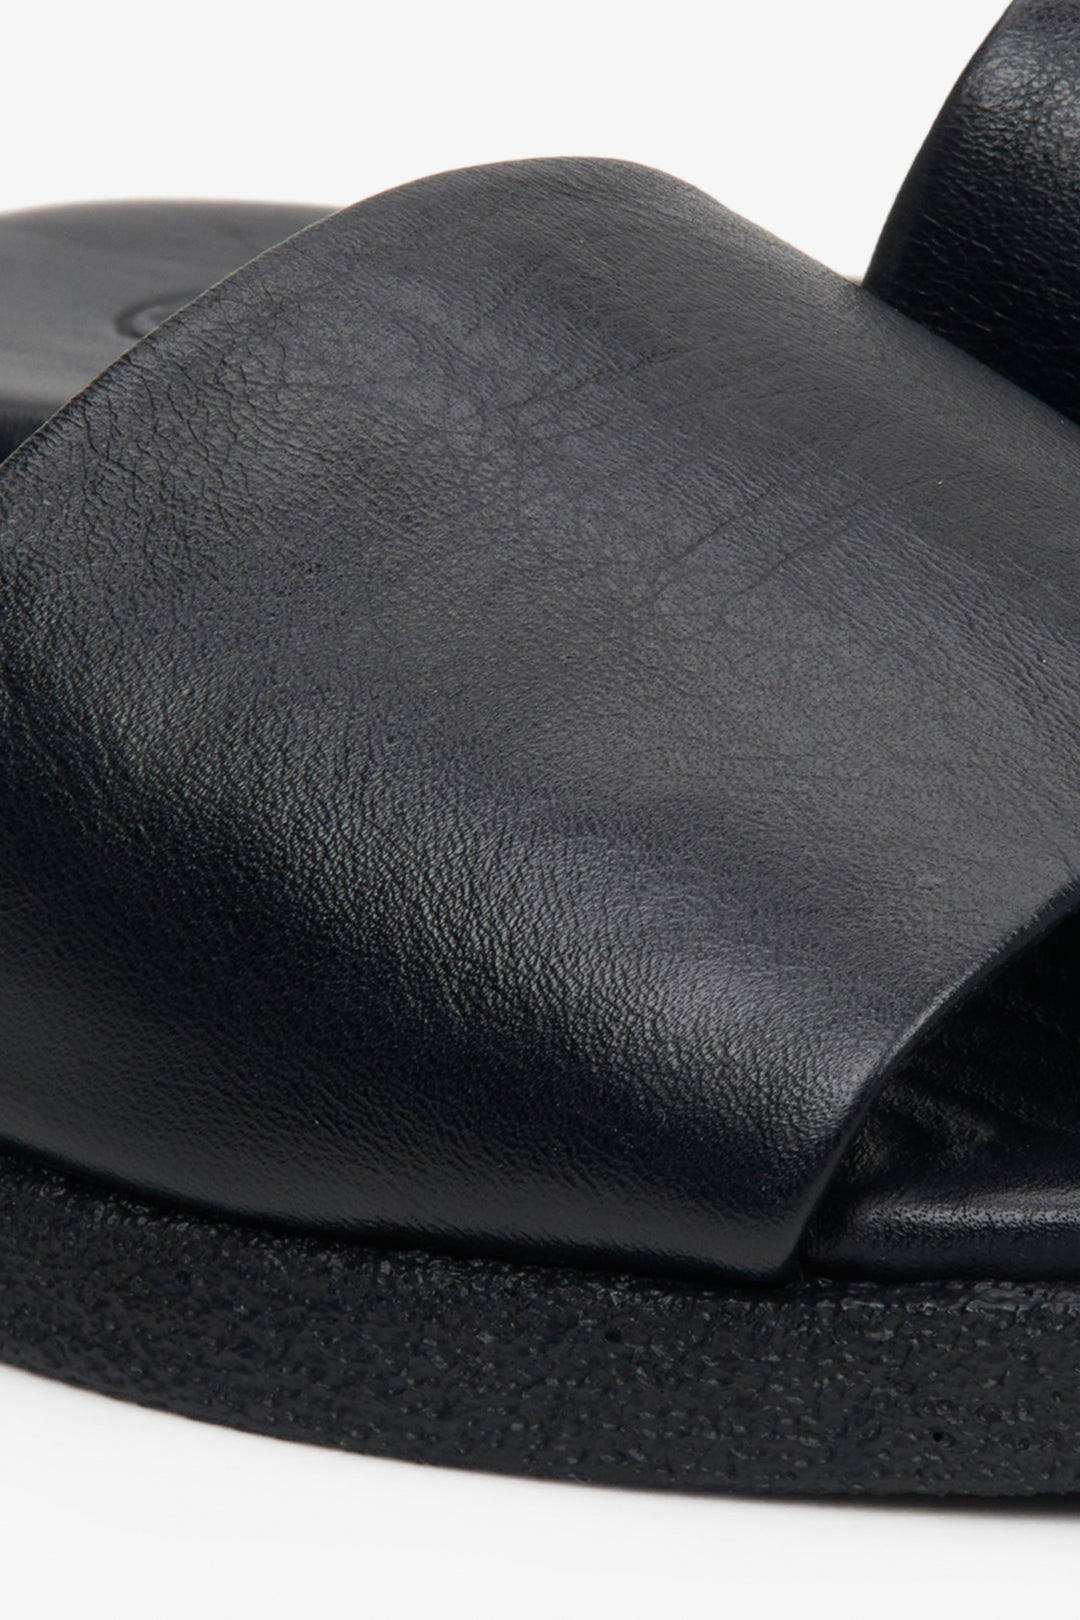 Women's black Estro flat slides - close-up on details.